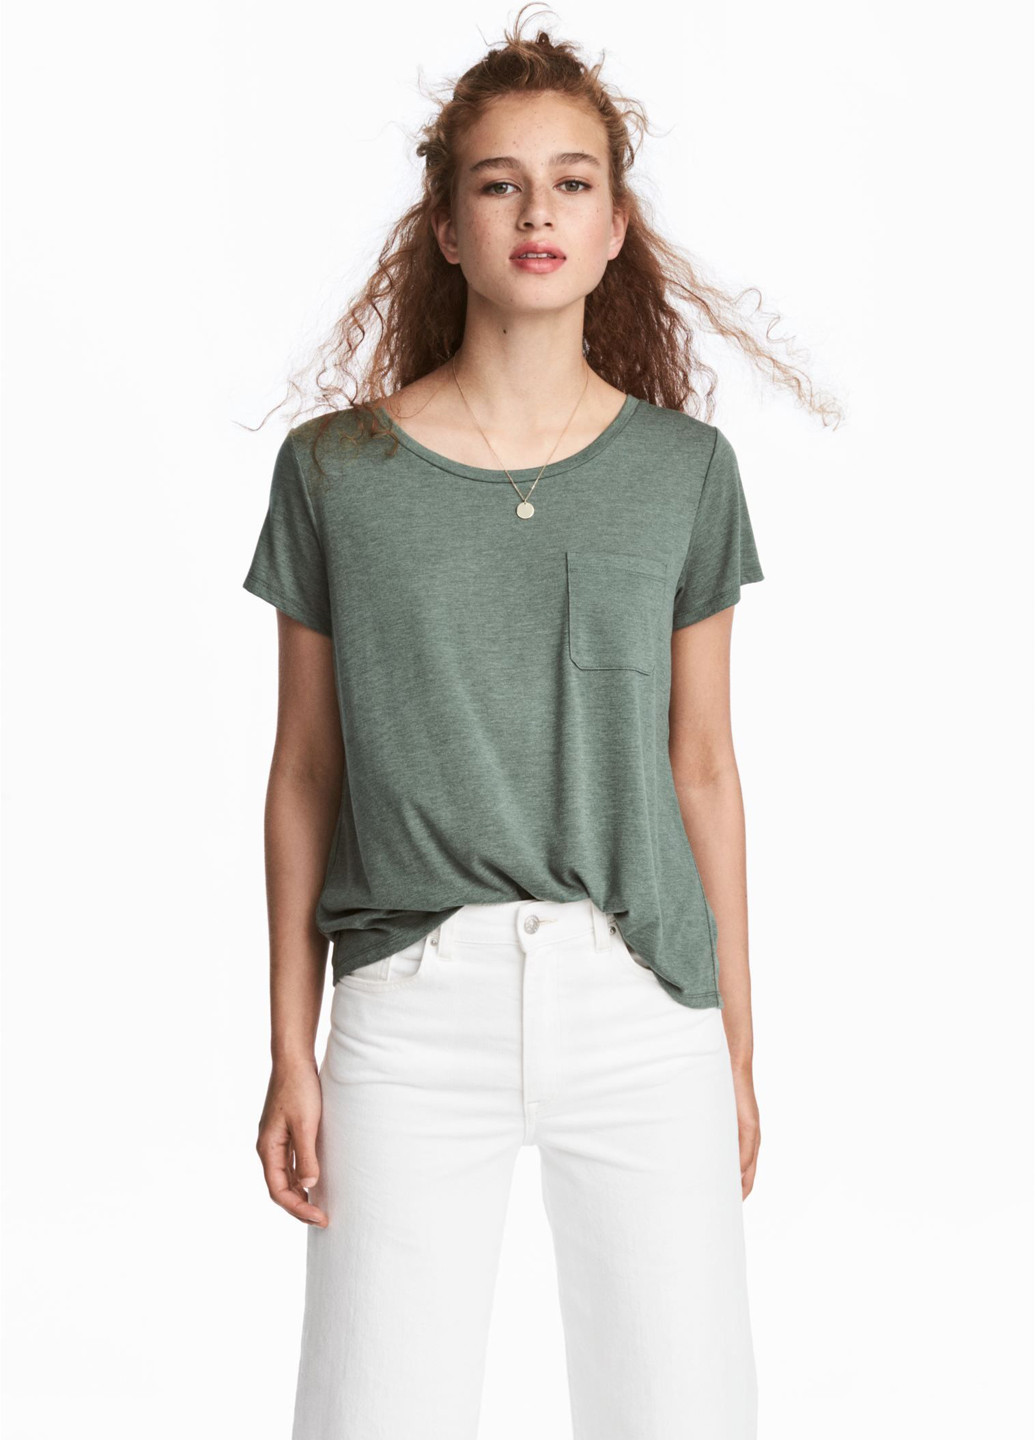 Зеленая летняя футболка H&M